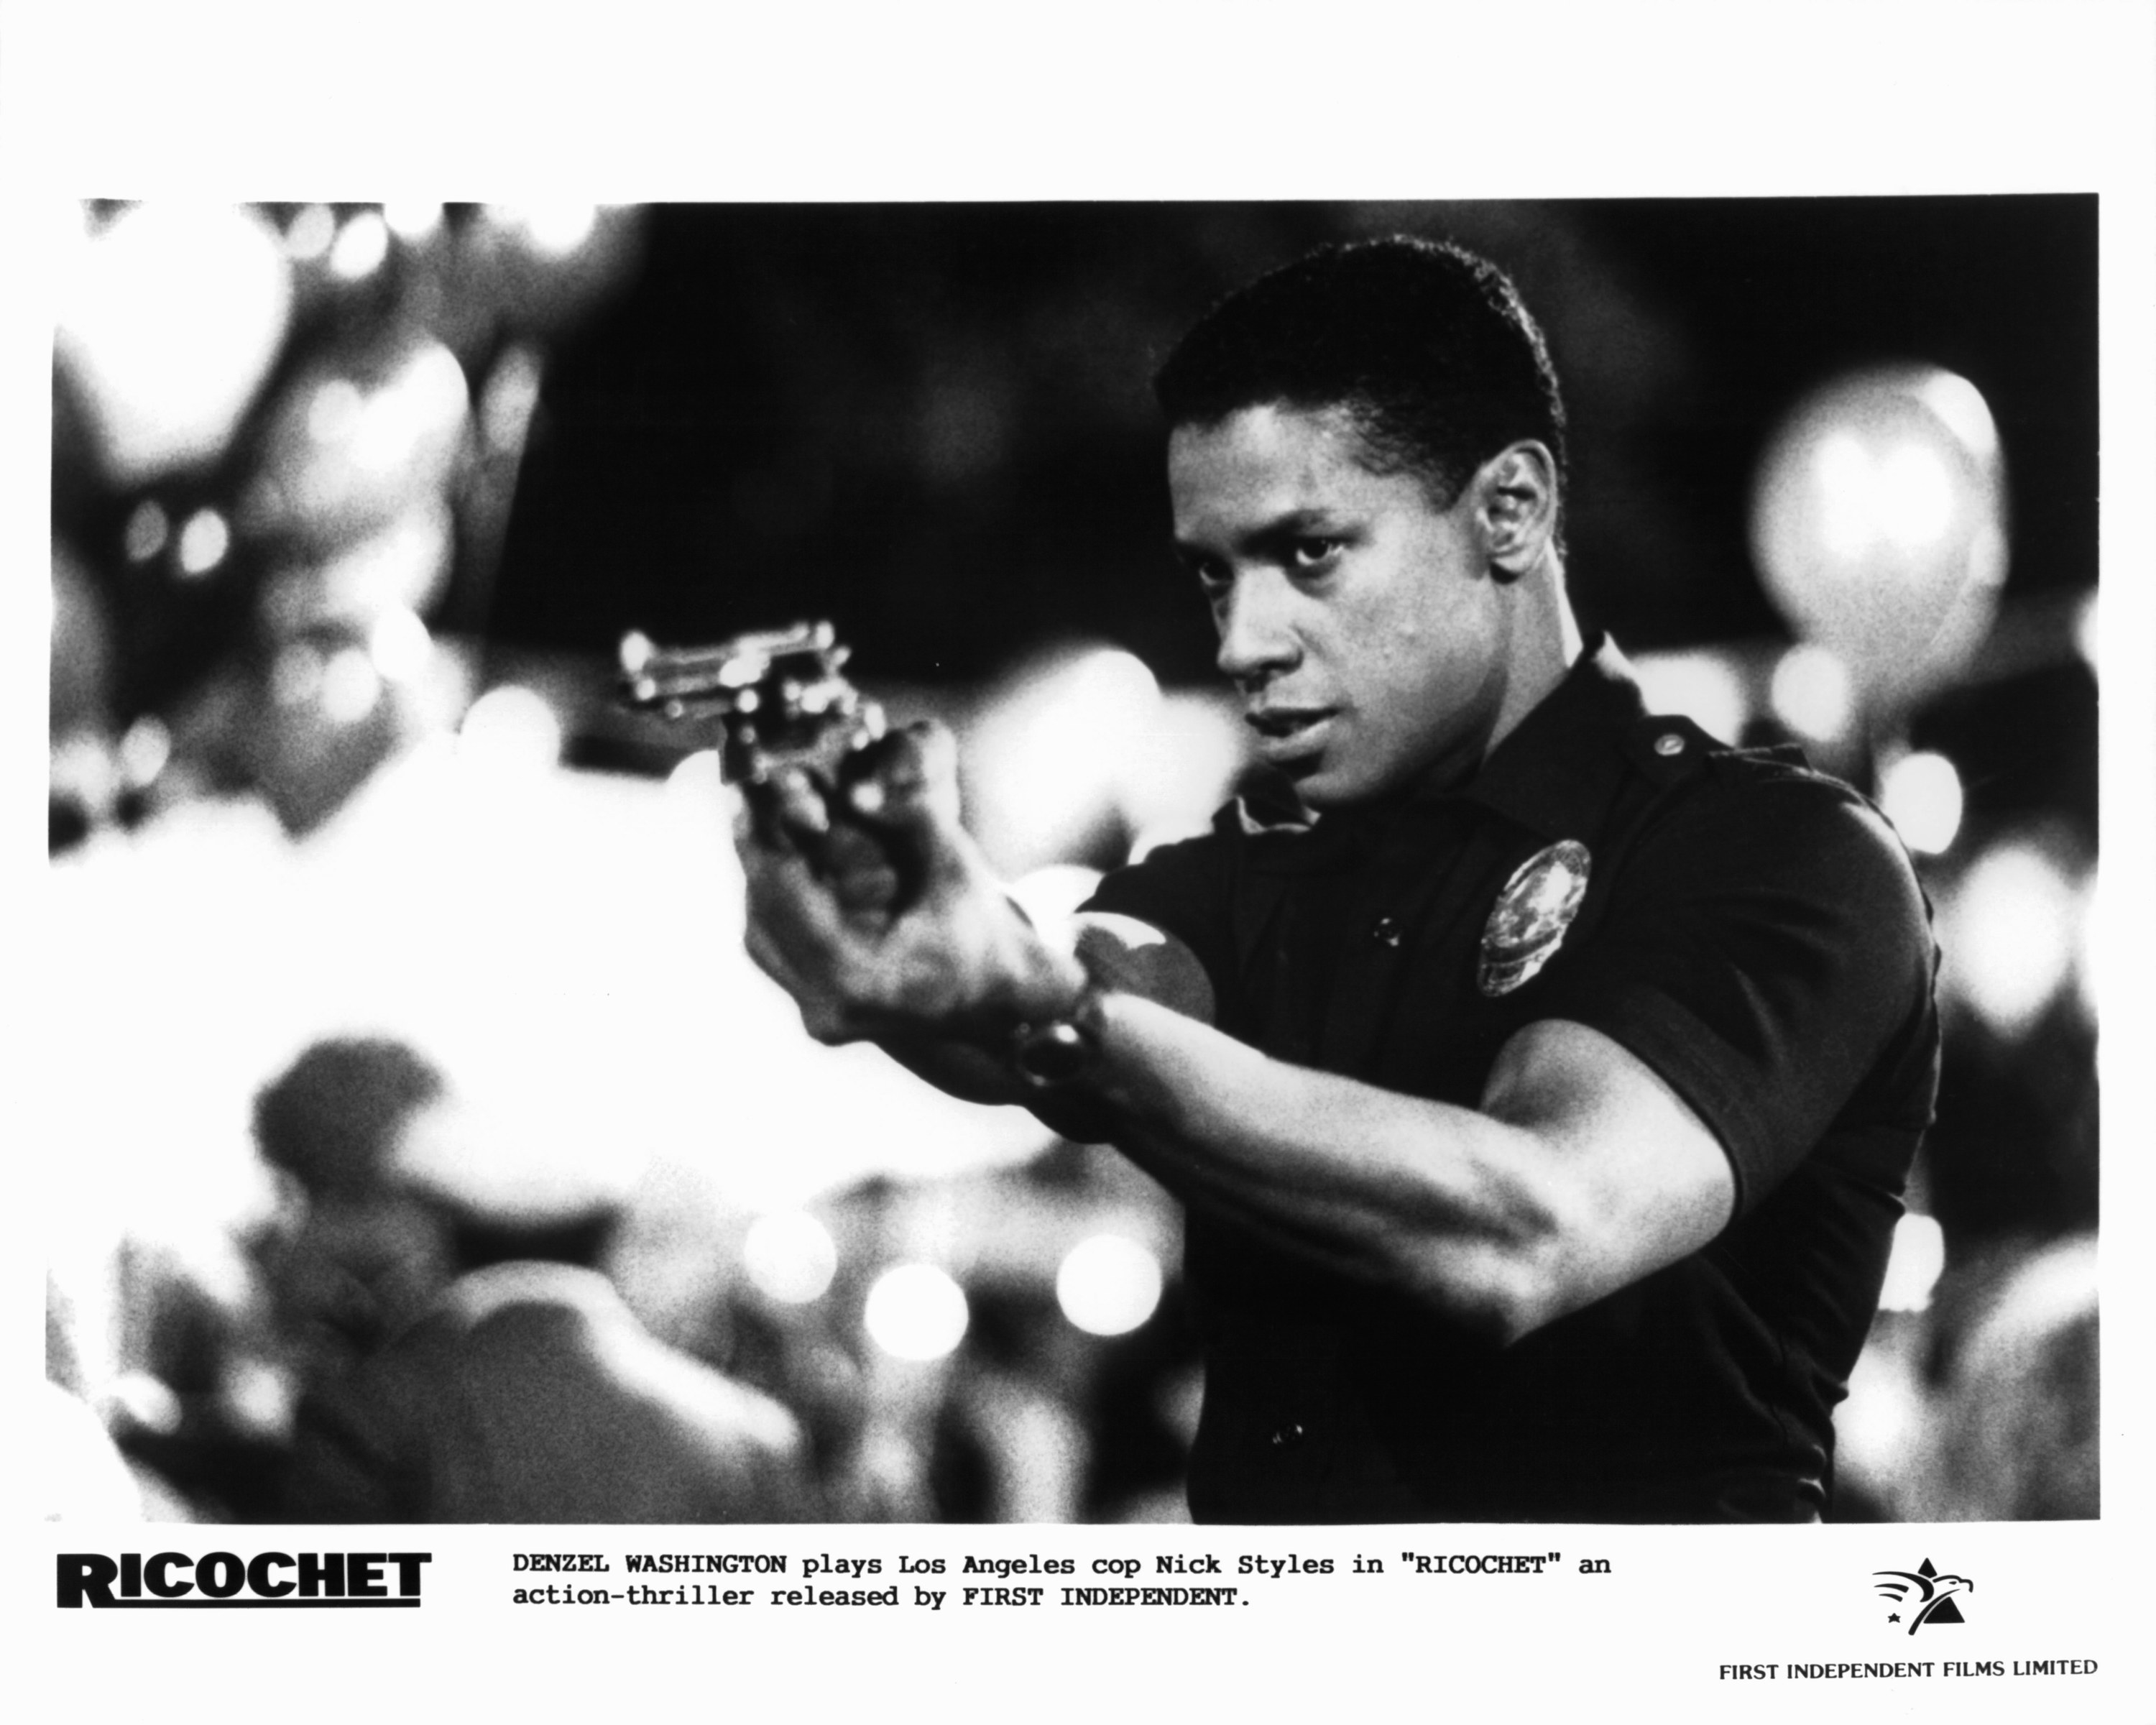 Denzel Washington points a gun in a scene from the film &#x27;Ricochet&#x27;,